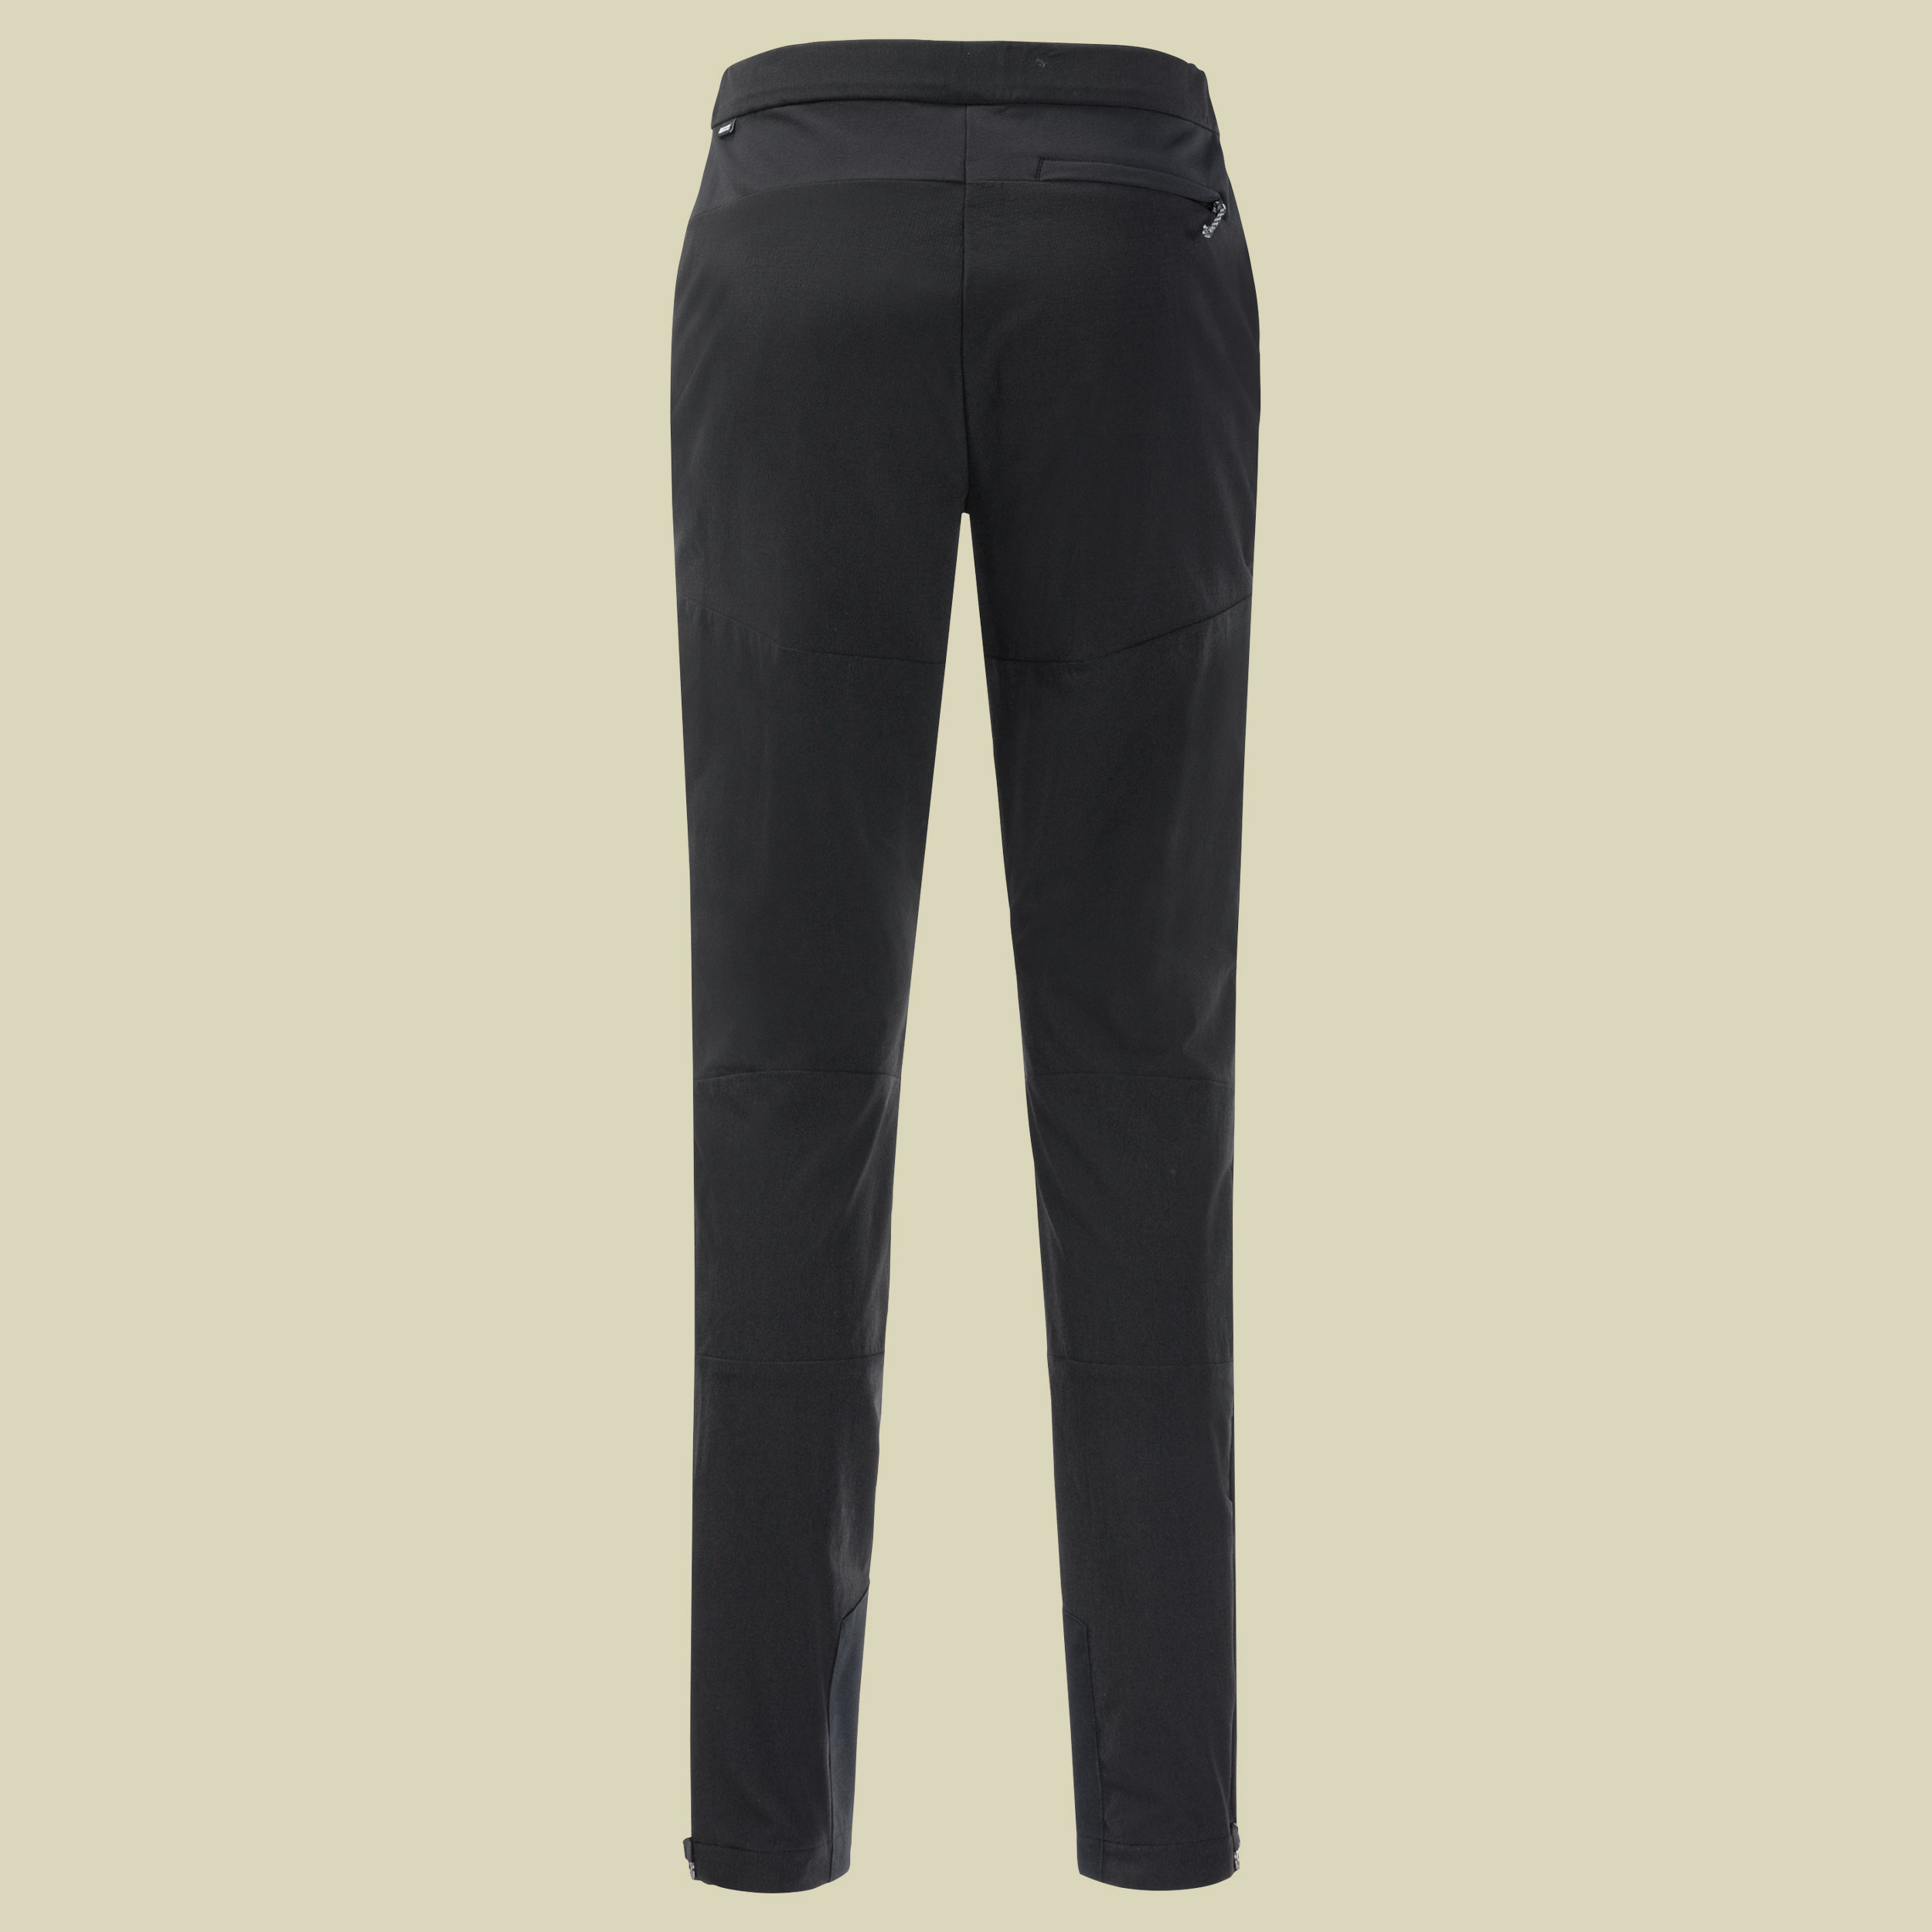 Salmaser Pants Women Größe 42 Farbe black